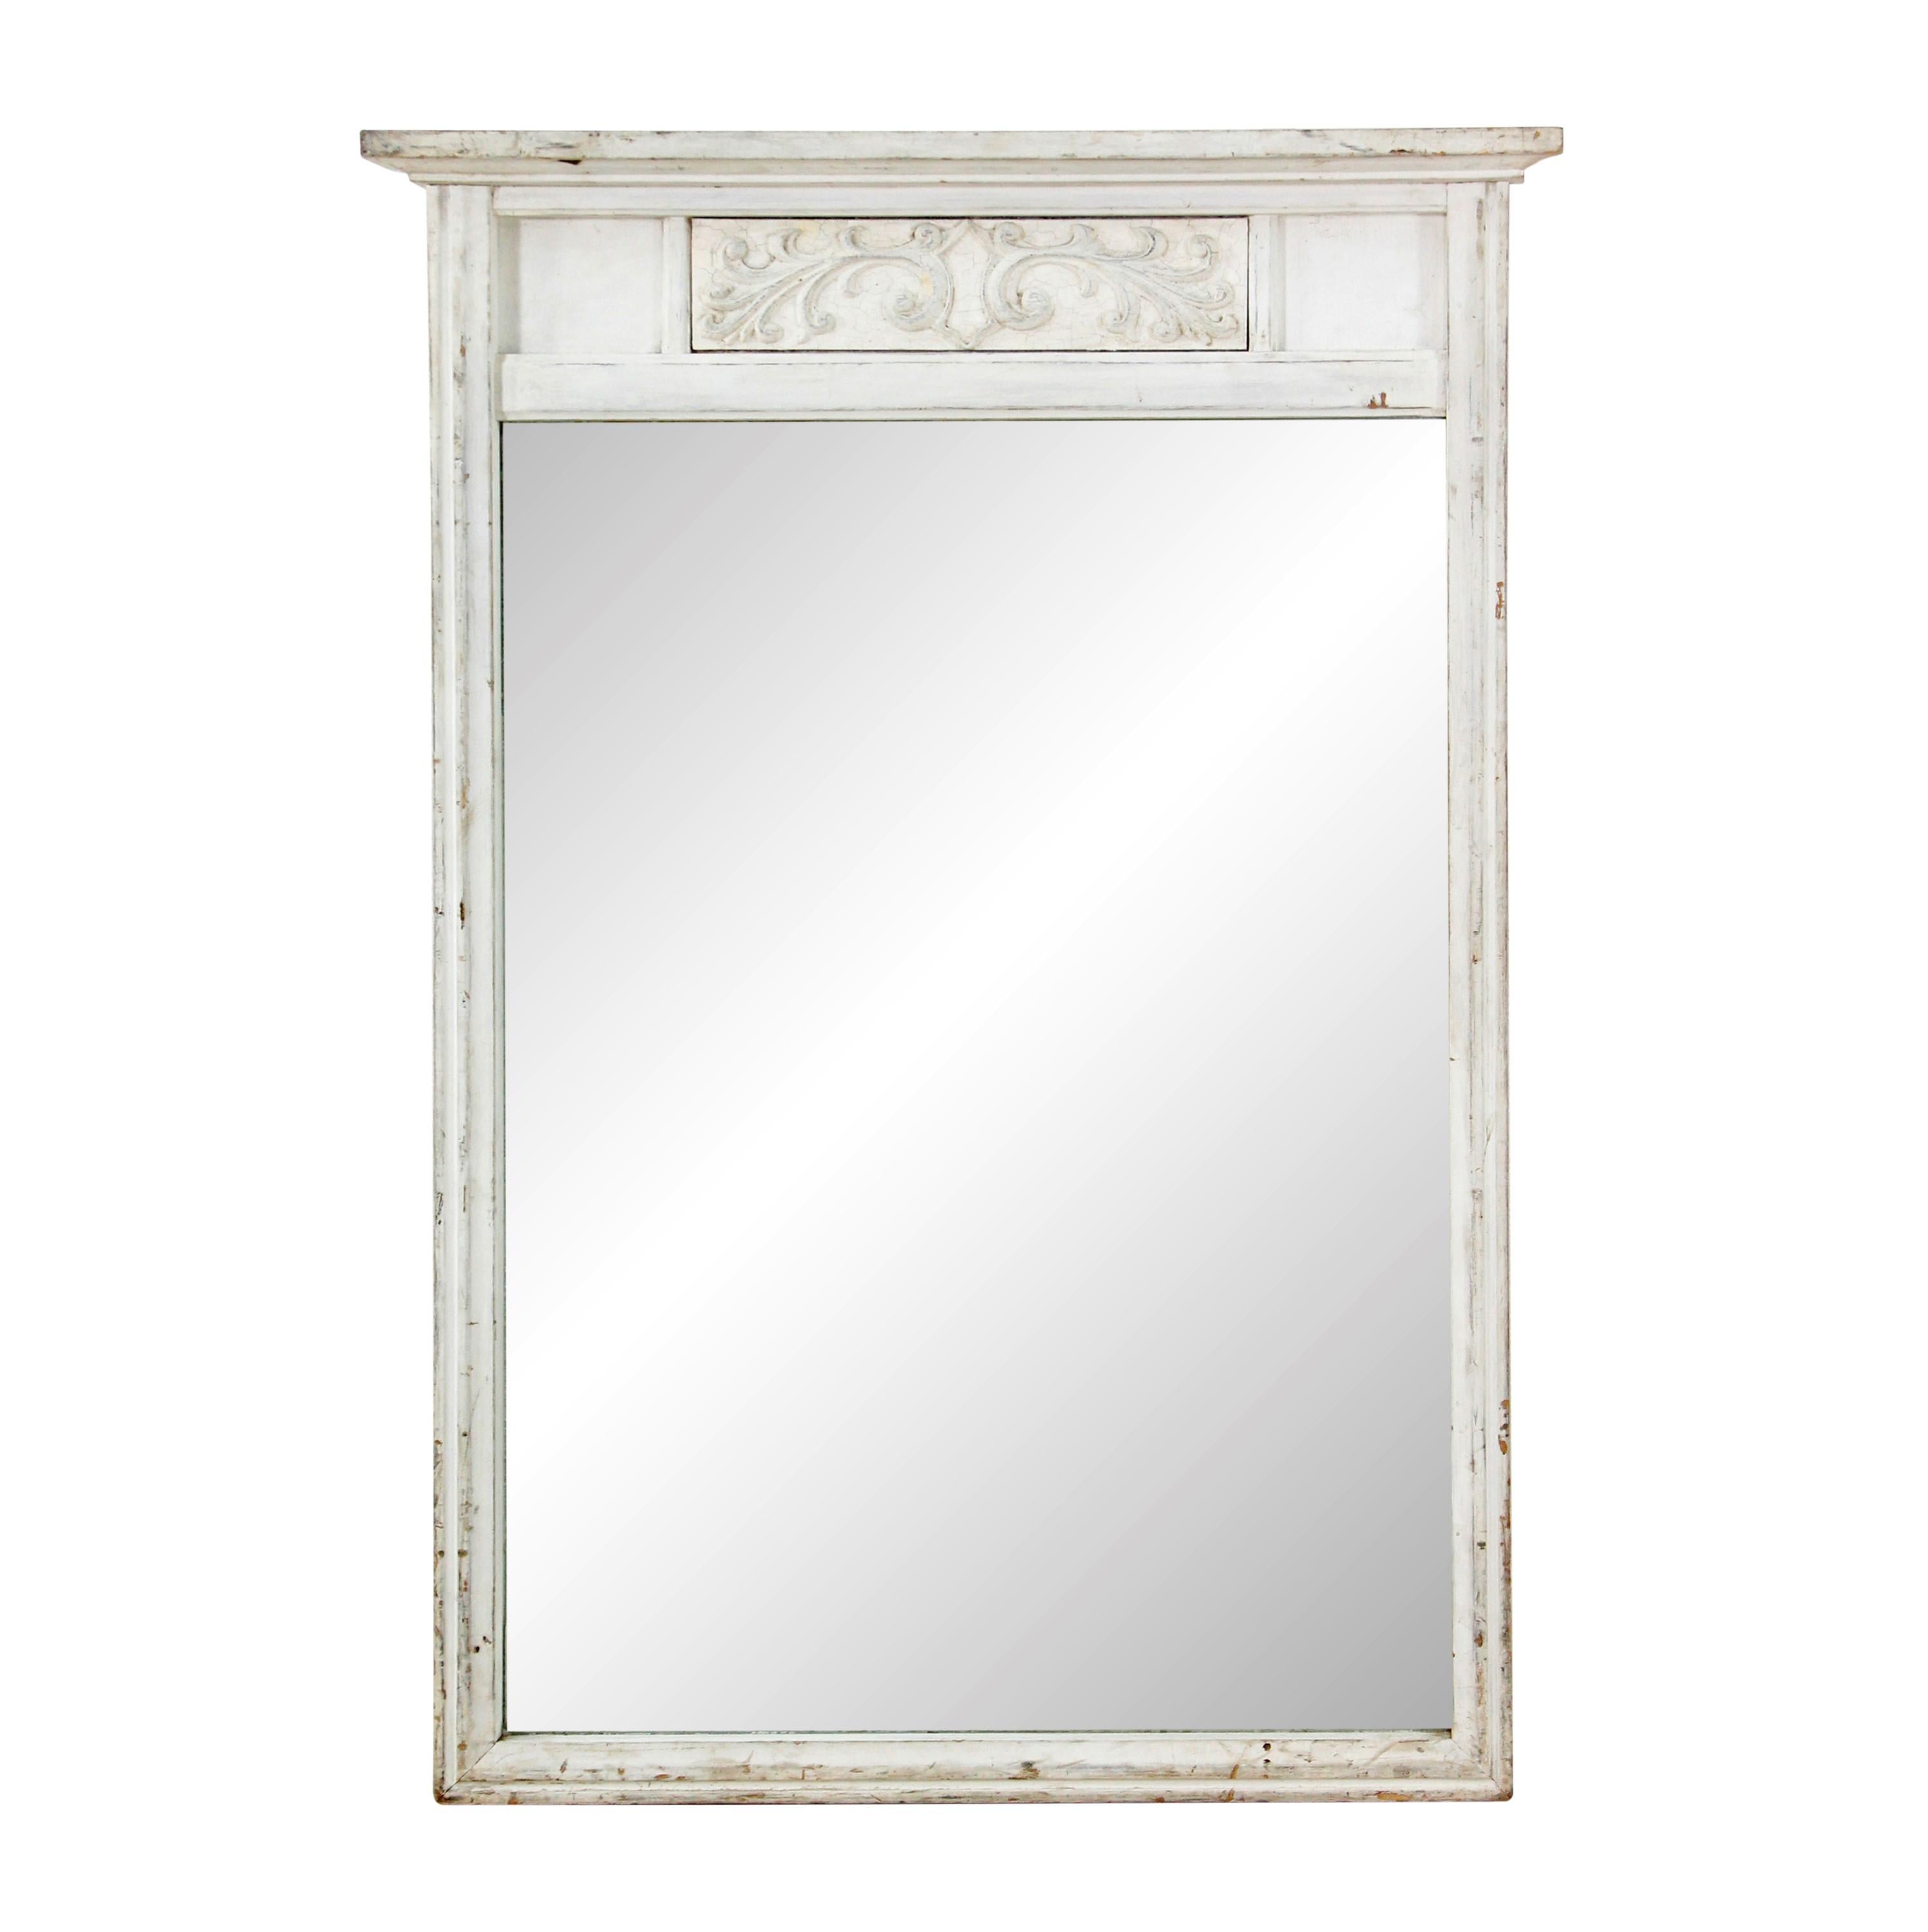 20th C White Wood Frame Over Mantel Mirror Floral Design 5